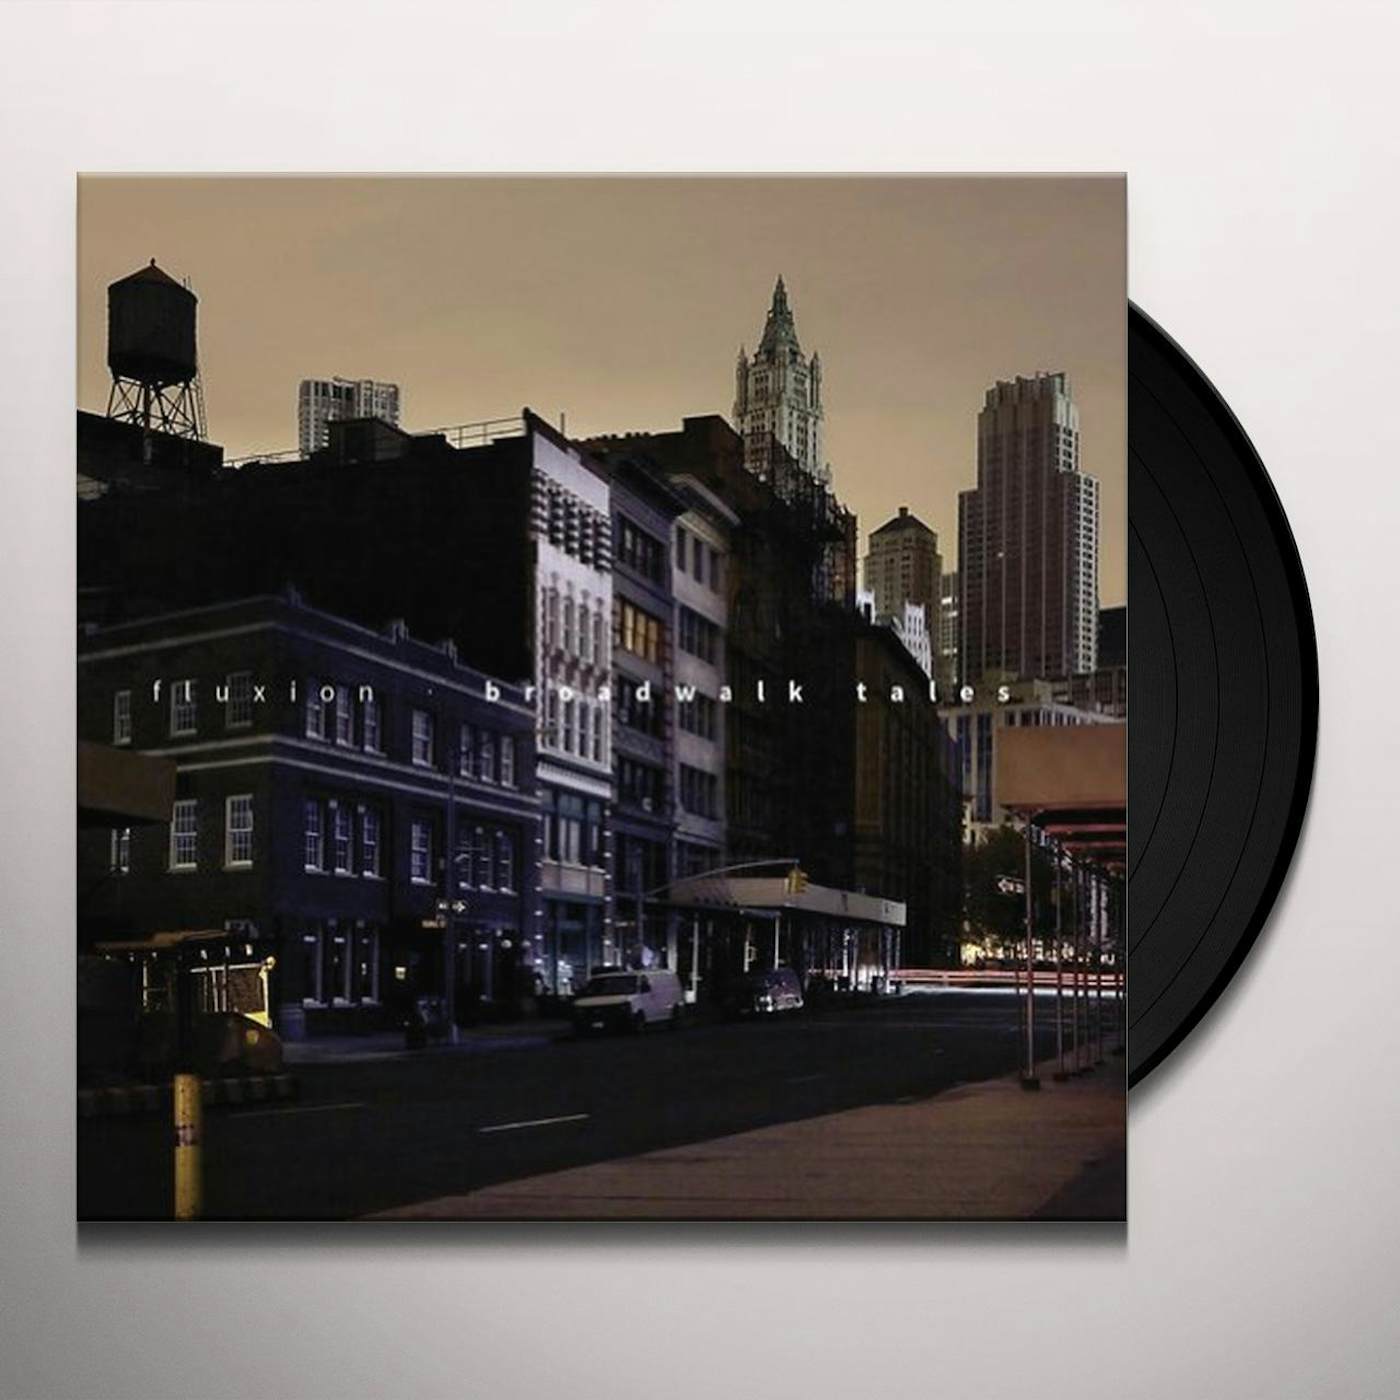 Fluxion Broadwalk Tales Vinyl Record